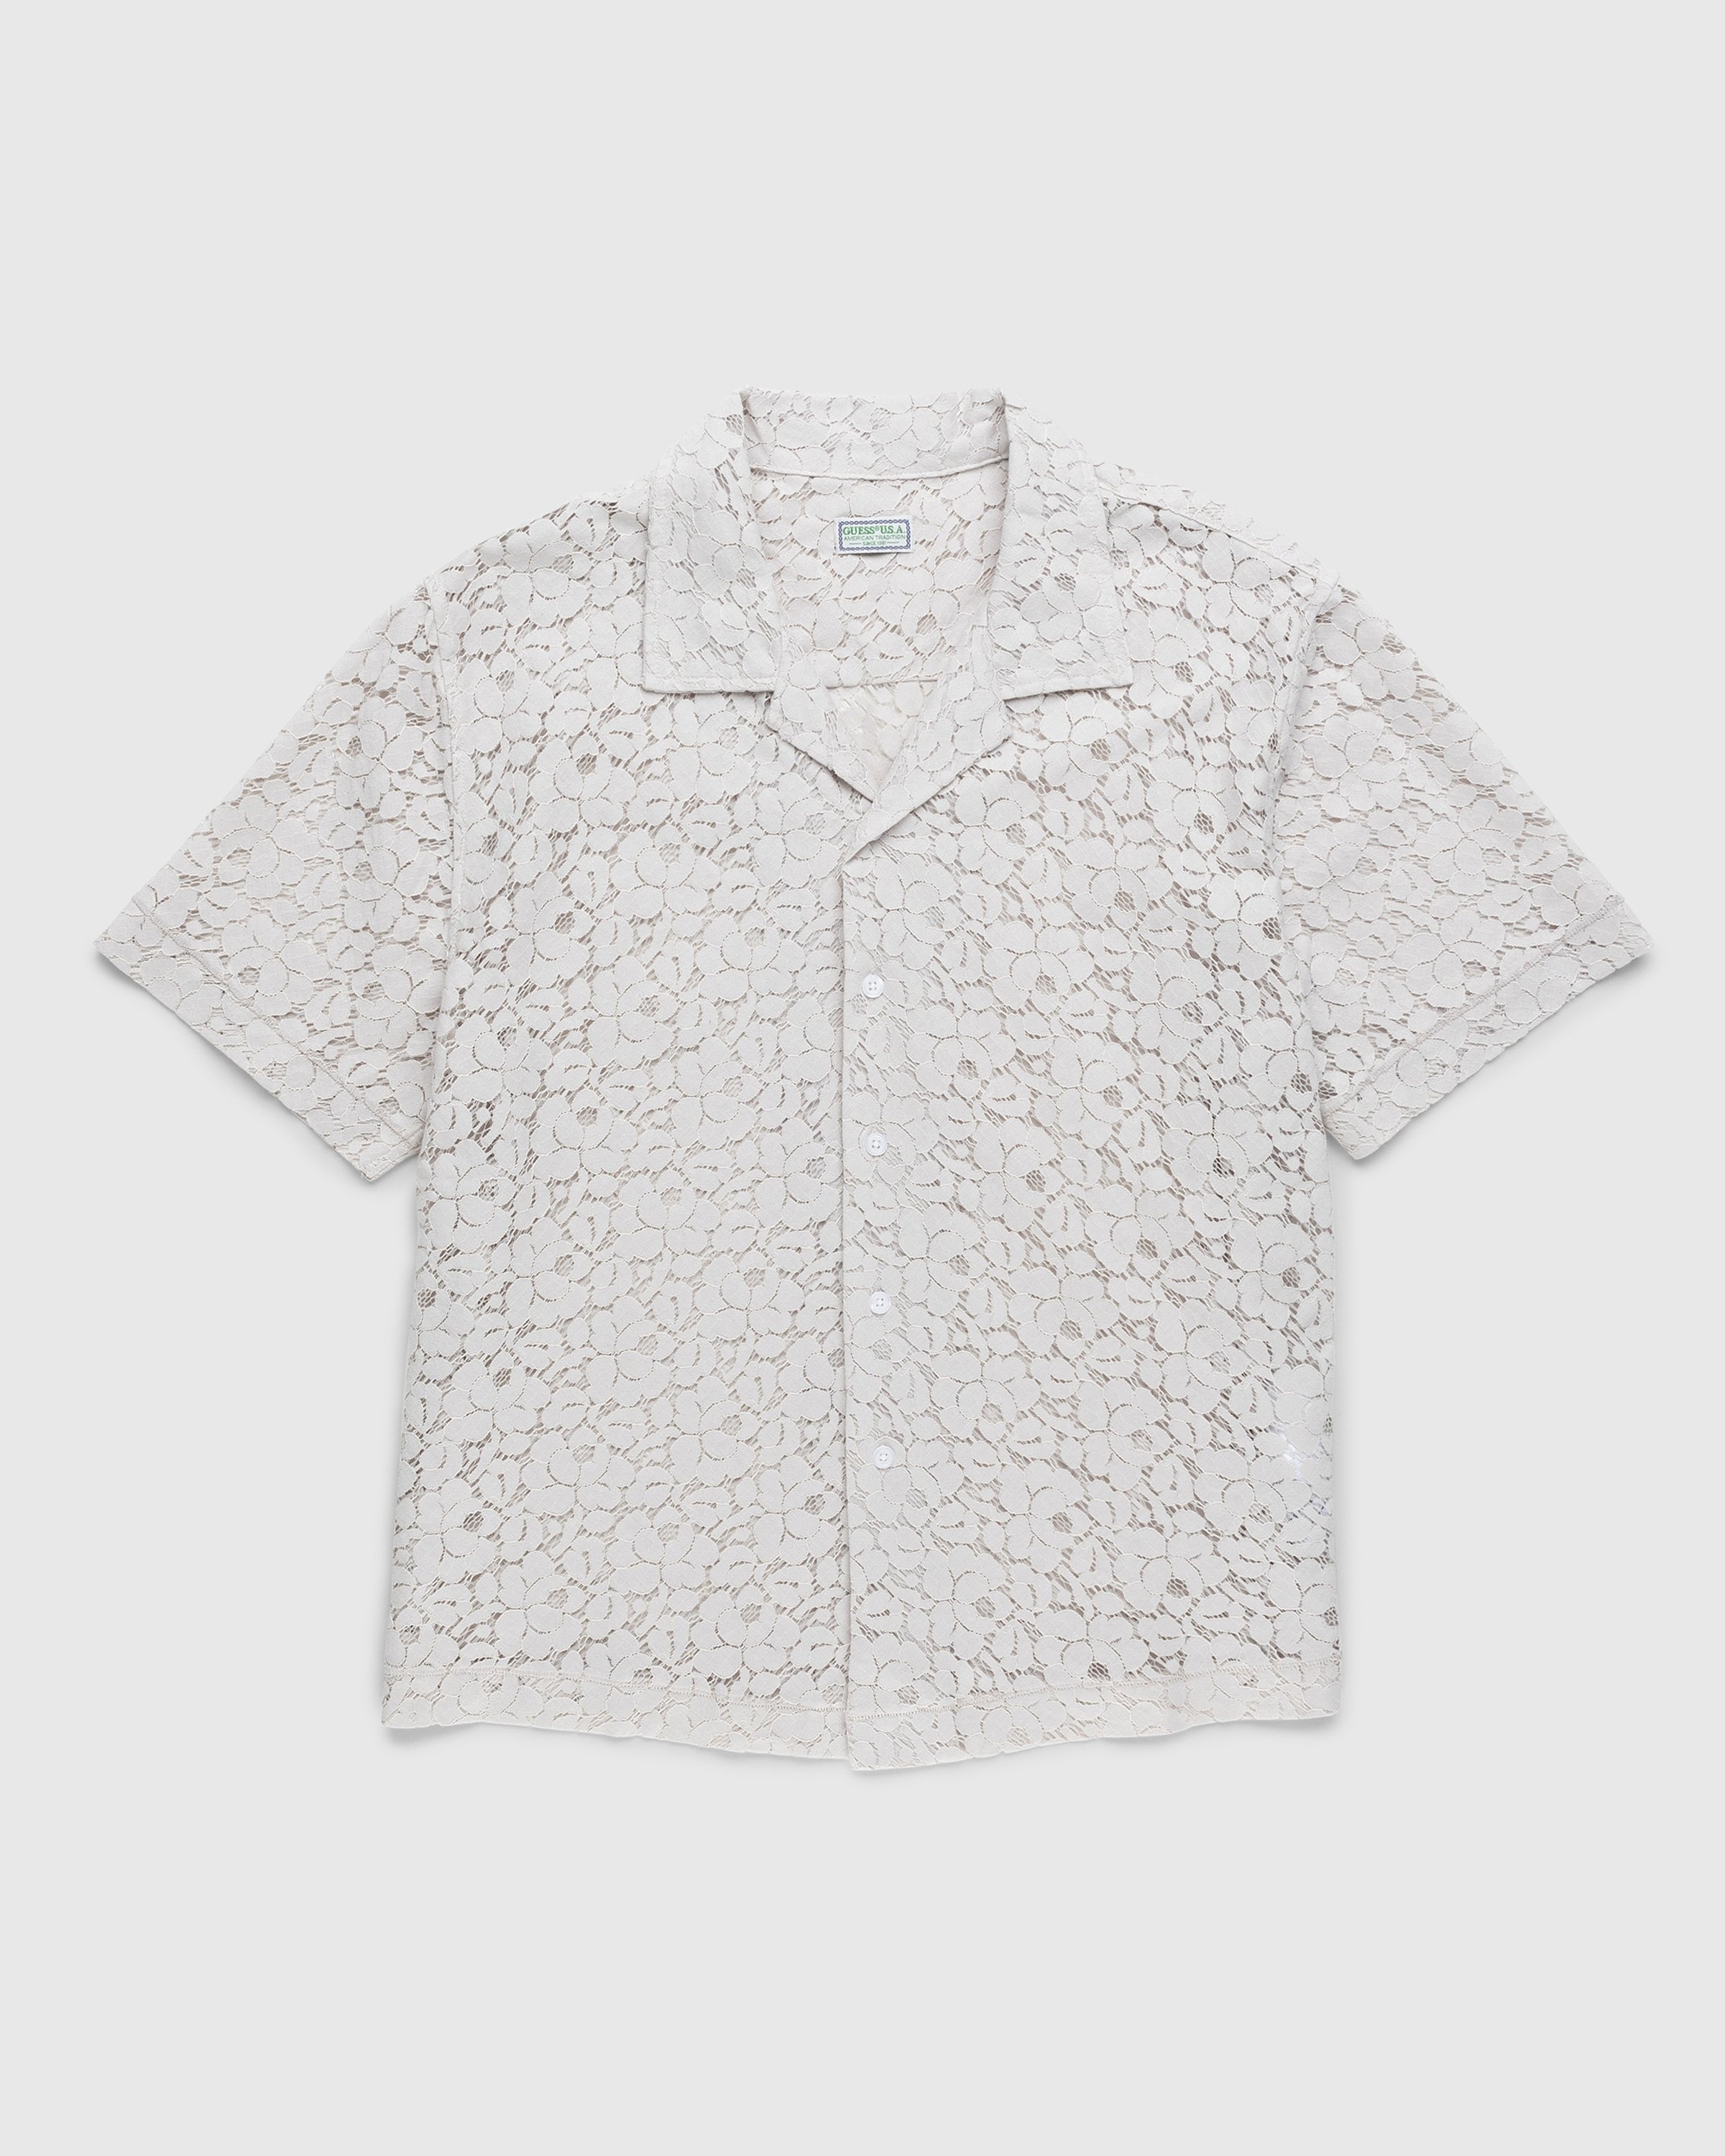 neu angekommen Guess USA – Shirt White Off Lace Shop Highsnobiety Camp 